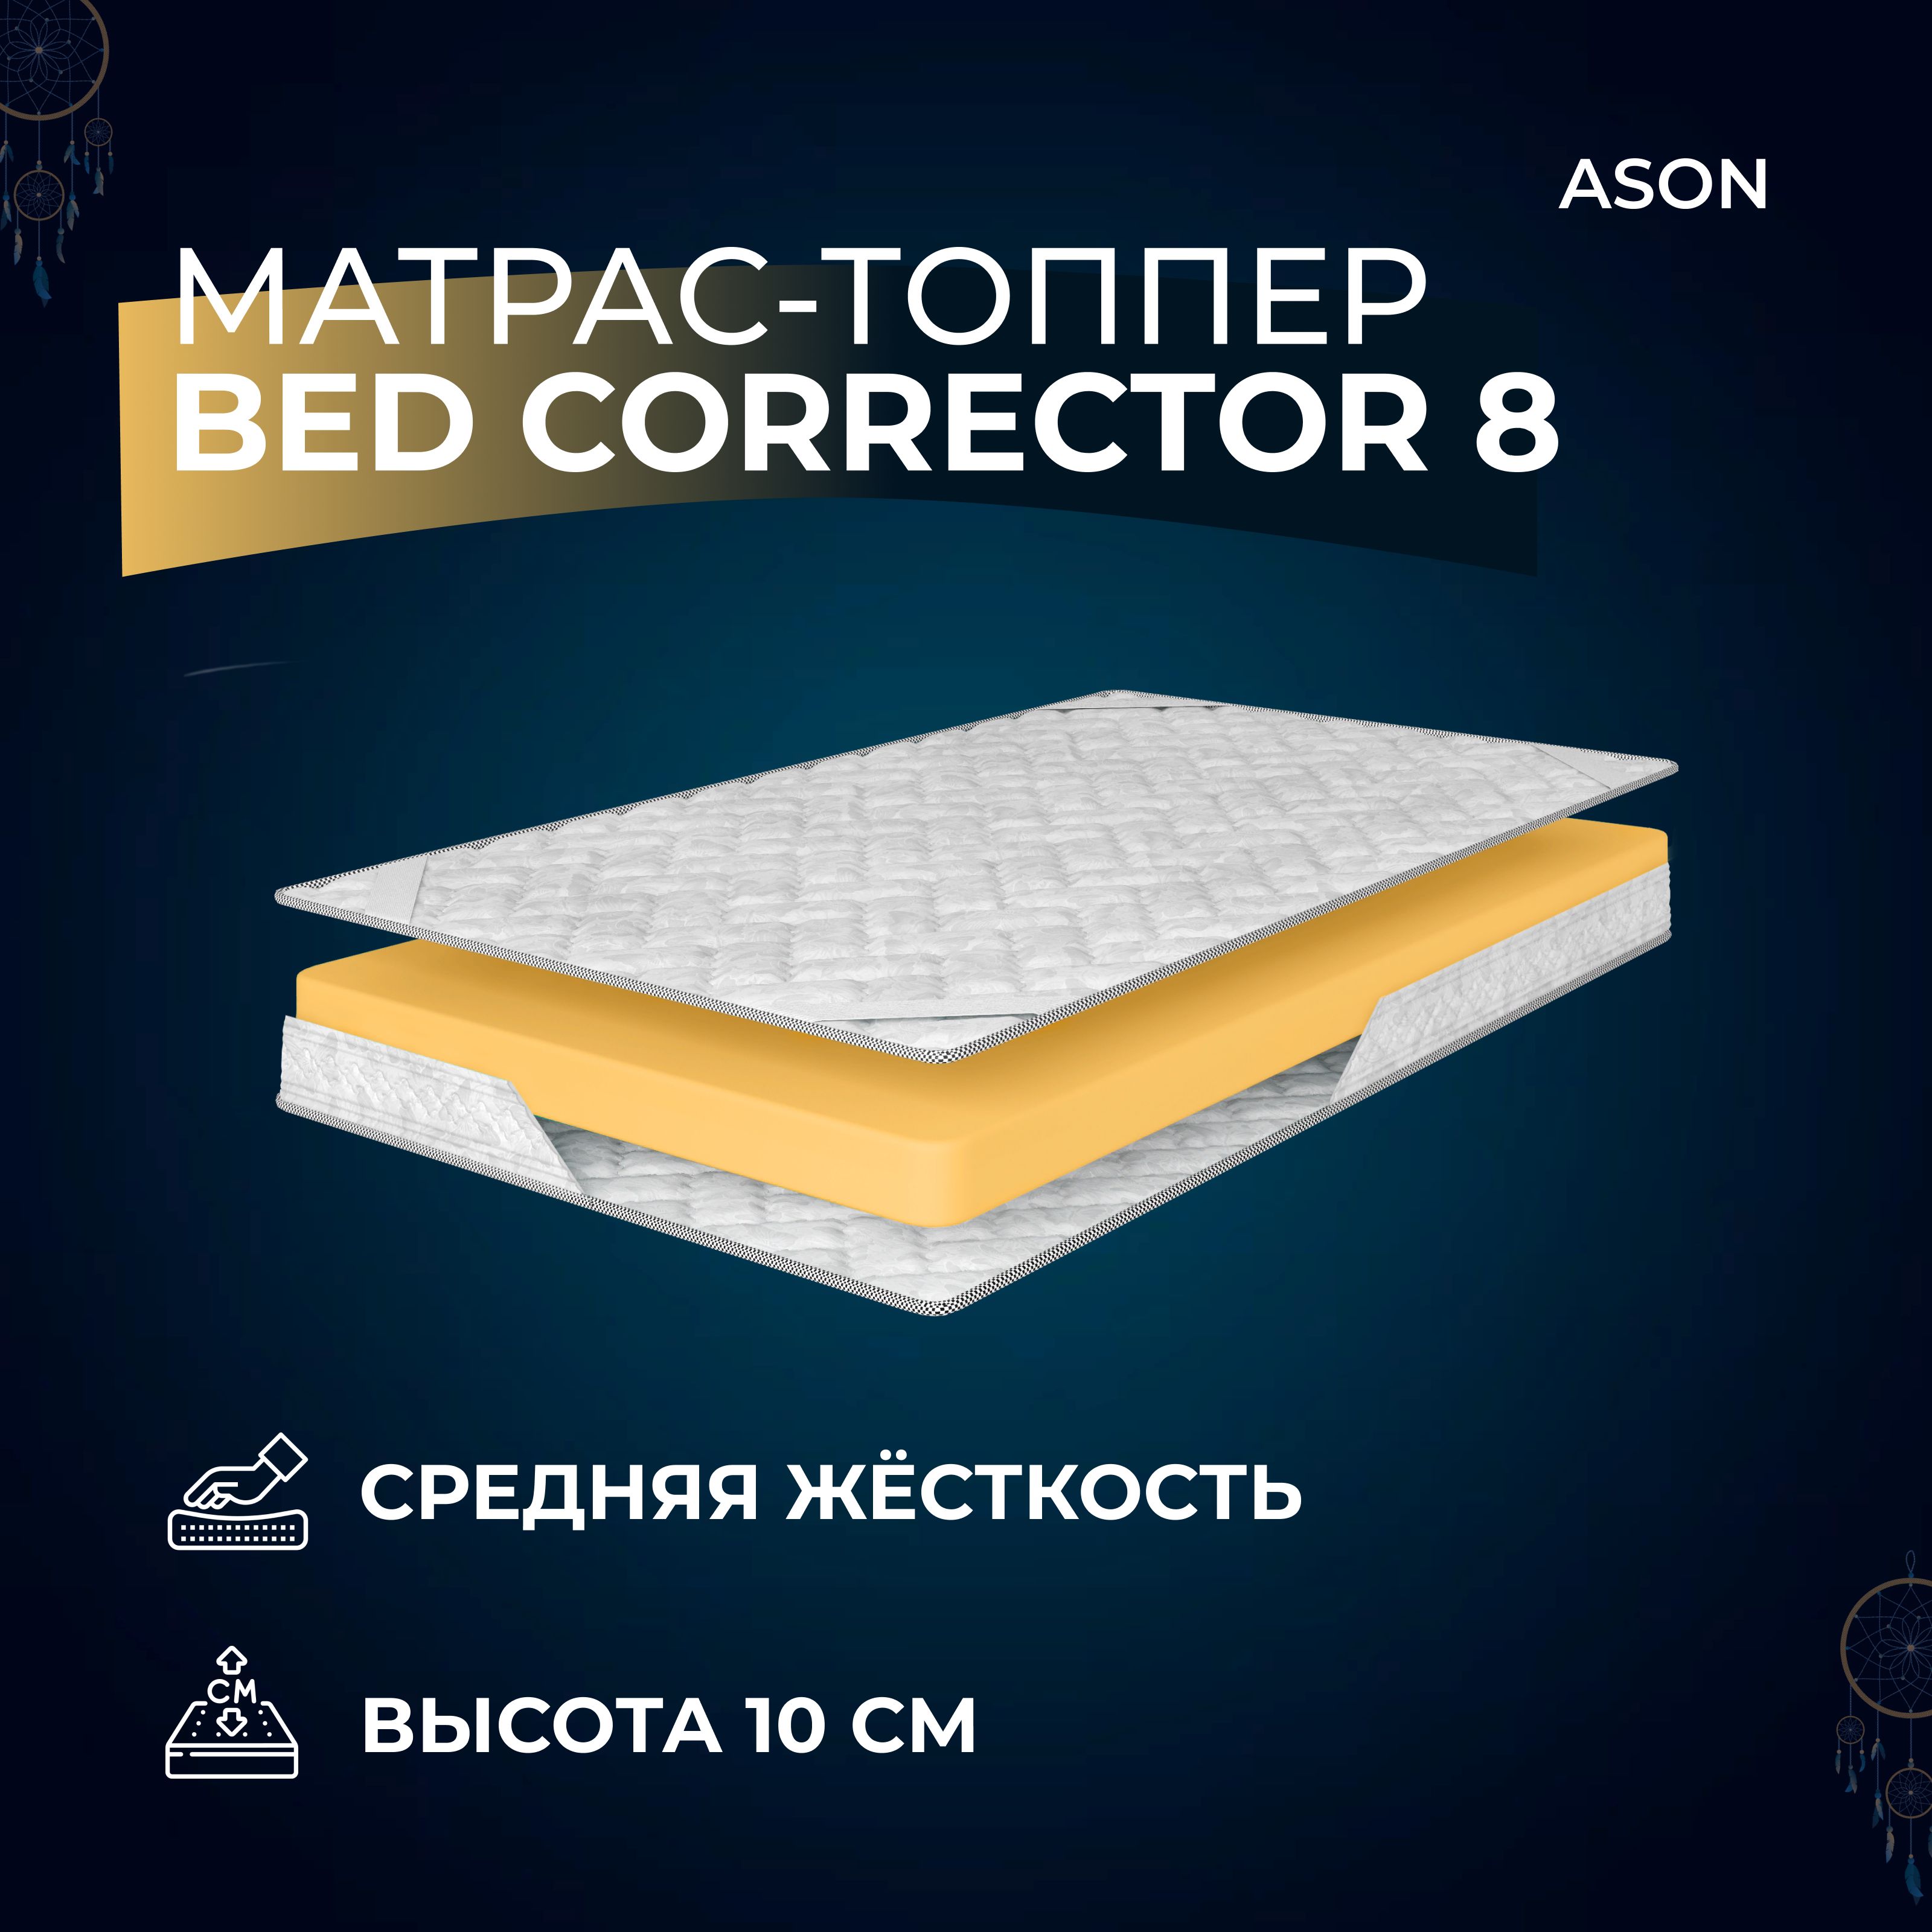 Матрас-топпер 145х185 Ason, Bed corrector 8